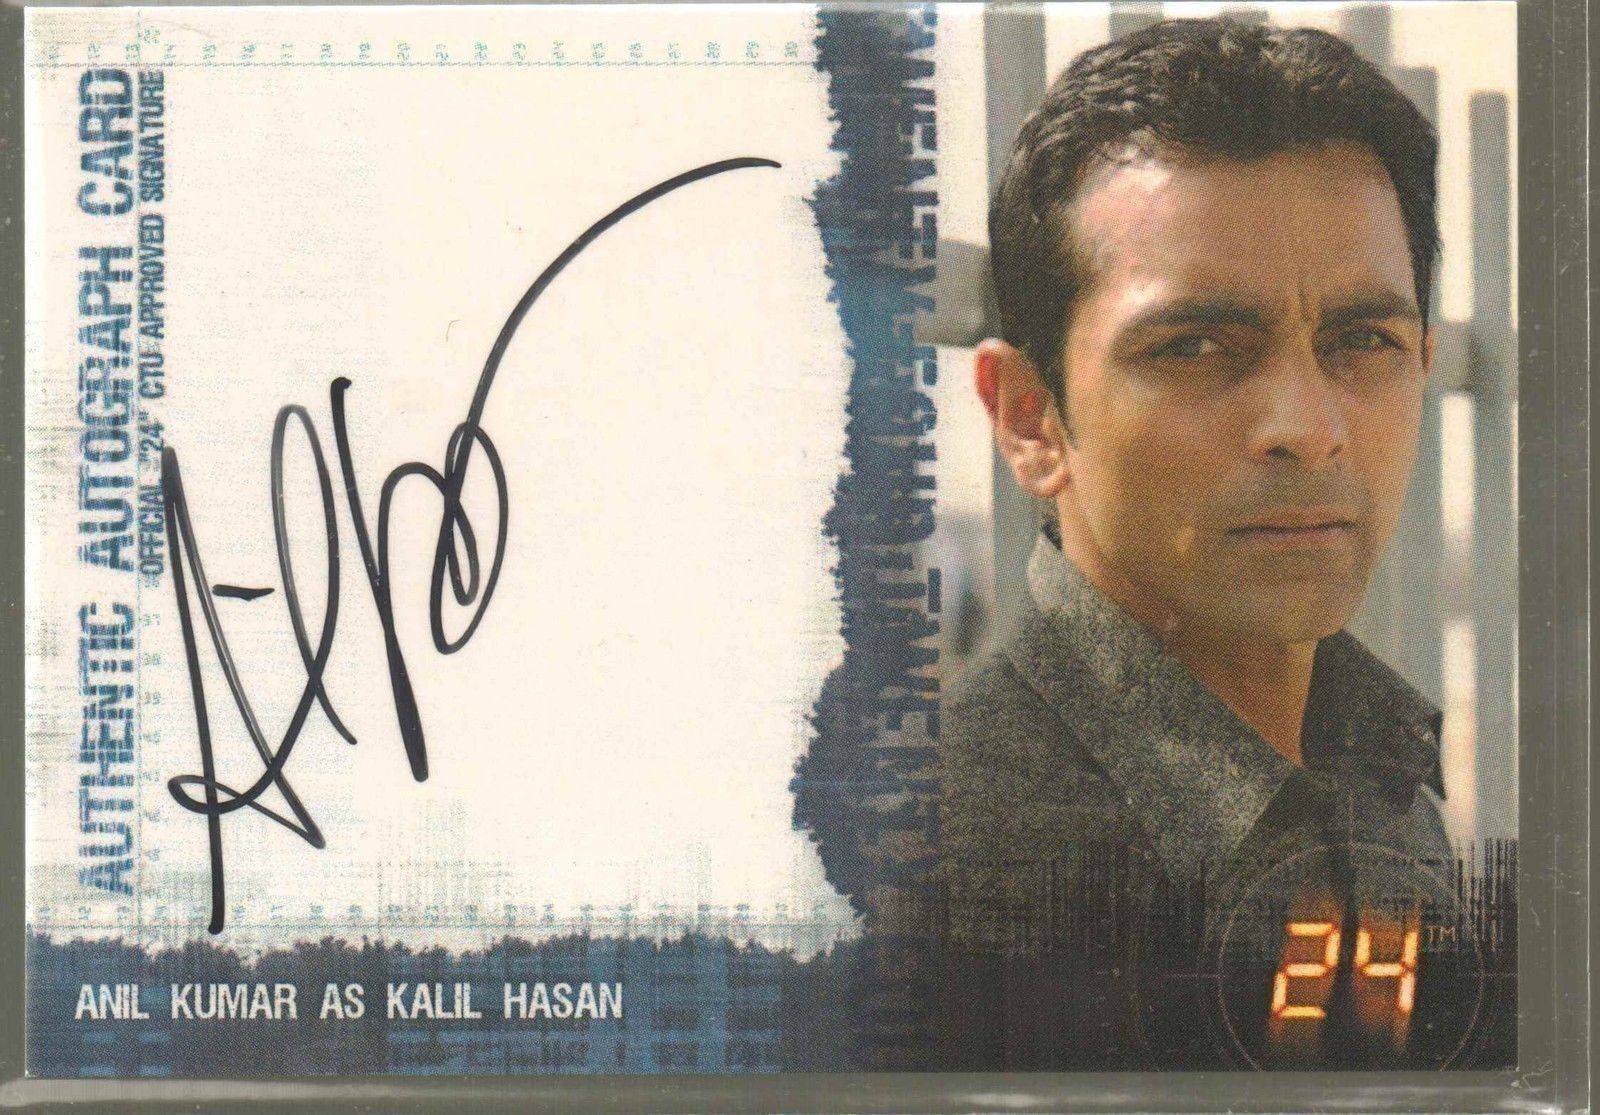 24 season 4 autograph card Anil Kumar as Kalil Hasan 200 signed